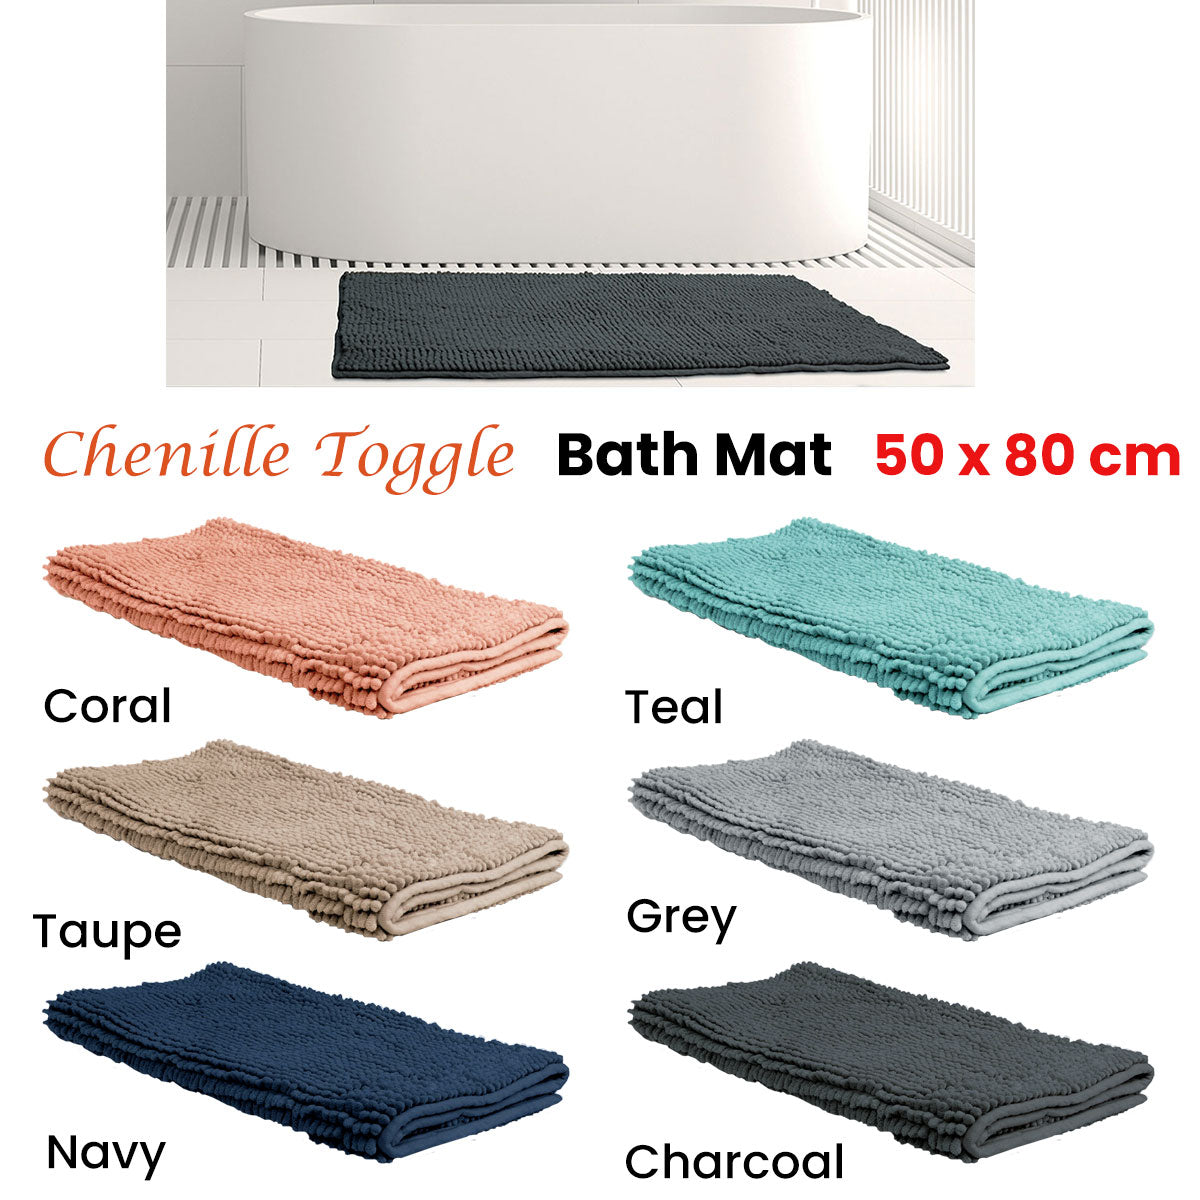 Chenille Toggle Bath Mat 50 x 80cm Coral - BM House & Garden